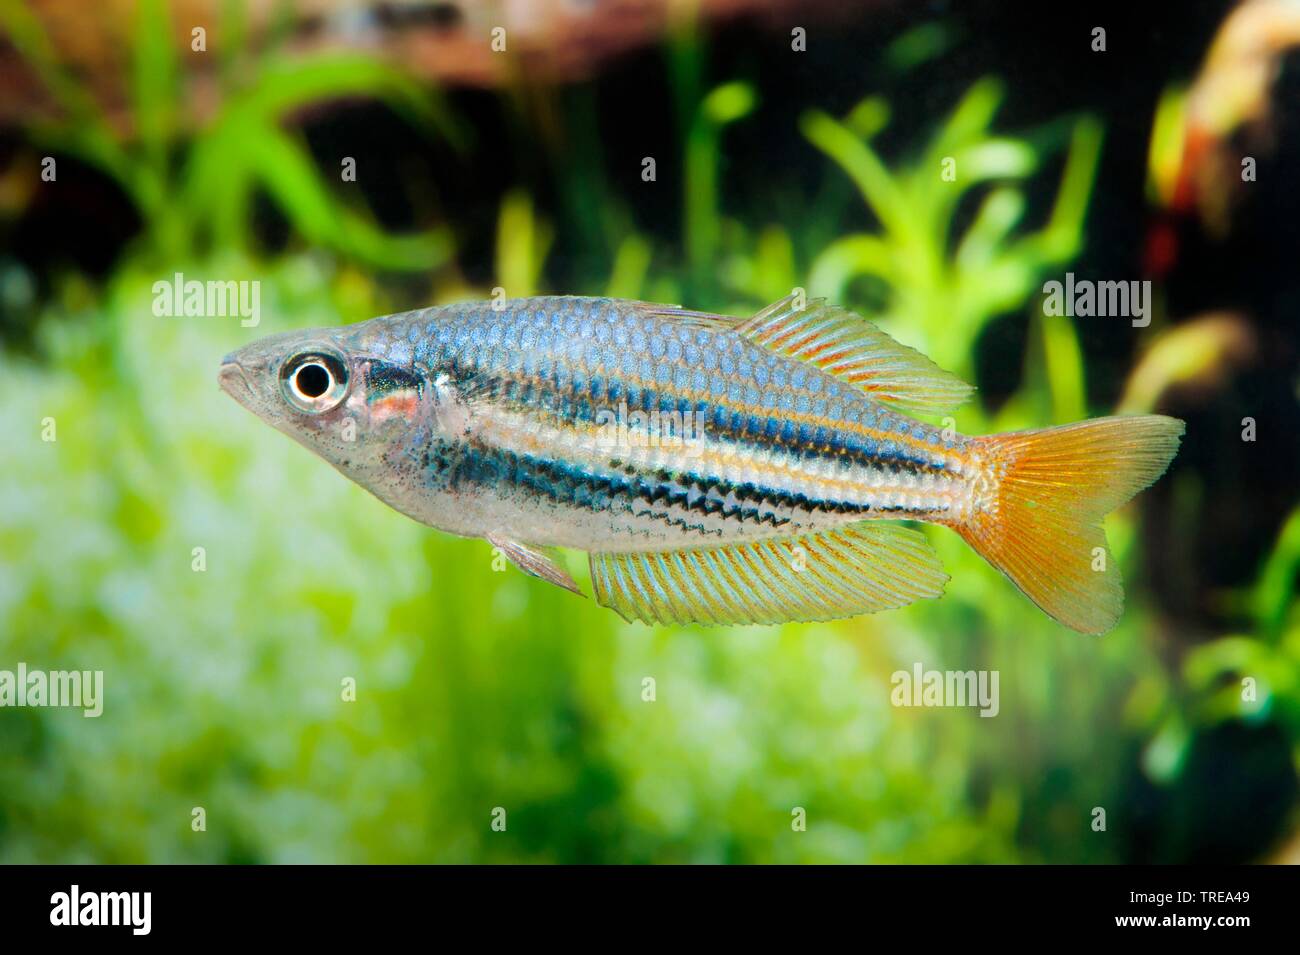 Dwarf Rainbowfish, Enano (Melanotaenia maccullochi Rainbowfish australiano), natación, vista lateral Foto de stock